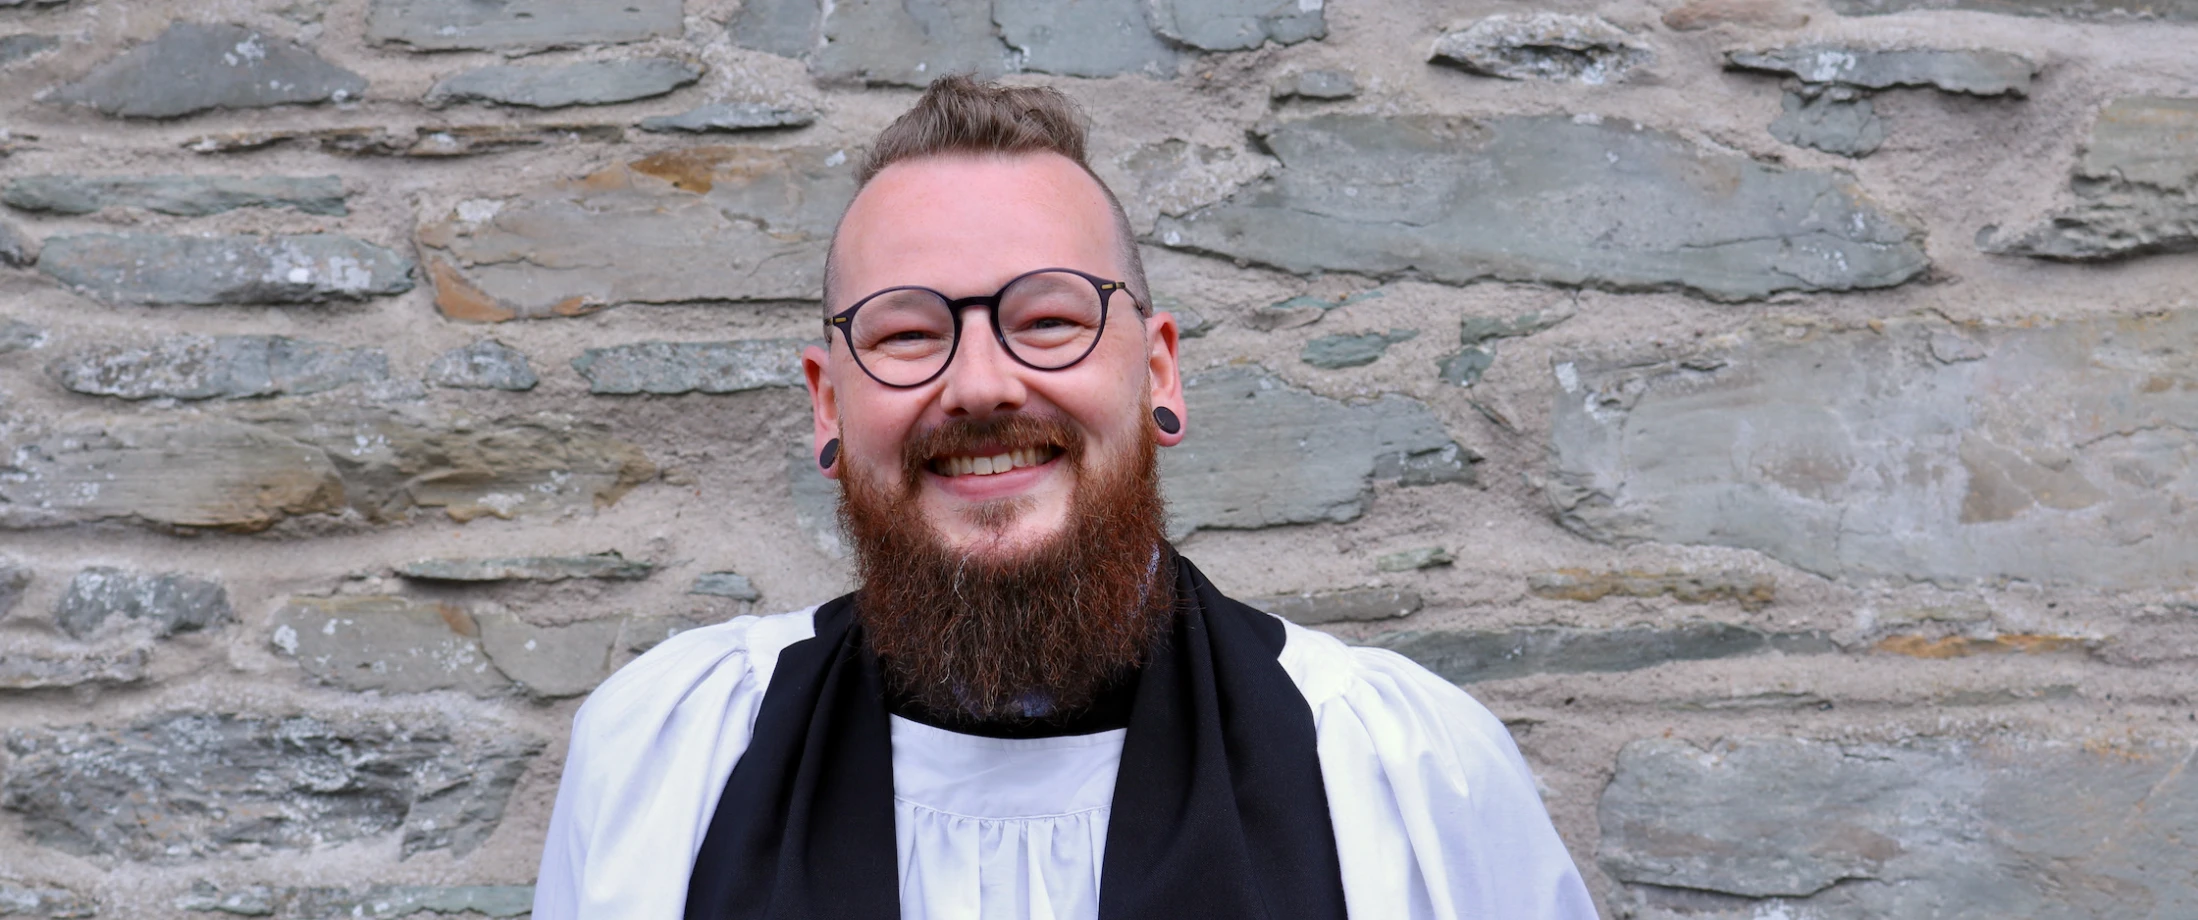 Revd Stu Armstrong is ordained presbyter